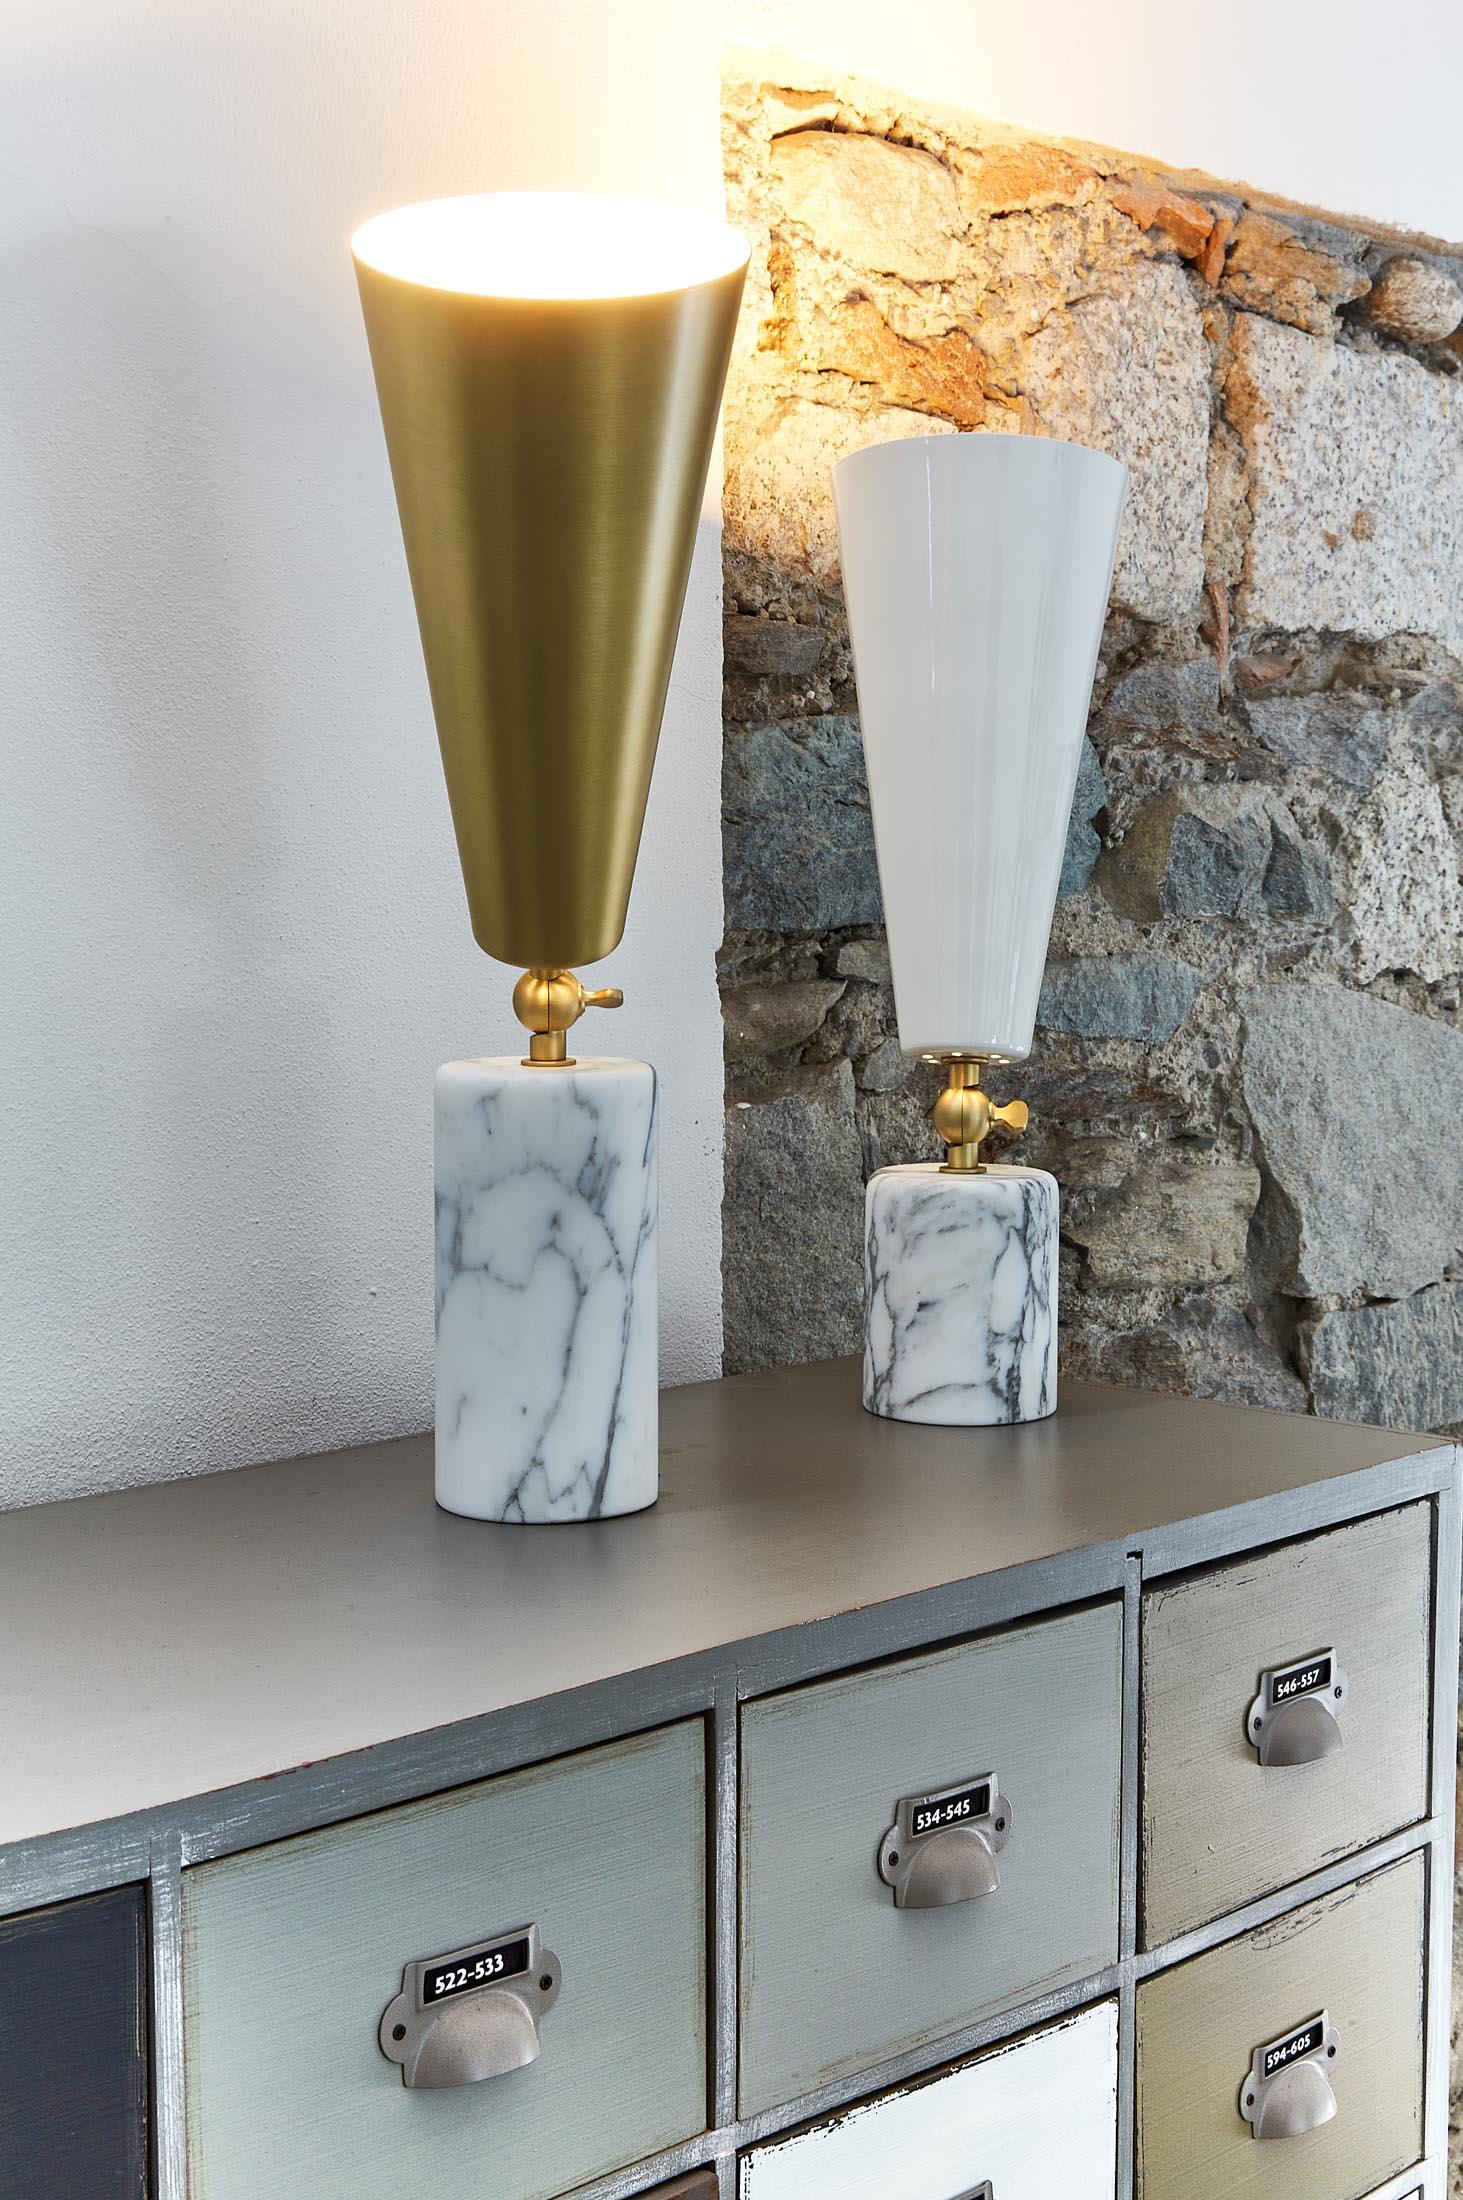 Tato Italia 'Vox' Table Lamp in White Carrara Marble, Chrome, and Glossy Black For Sale 3